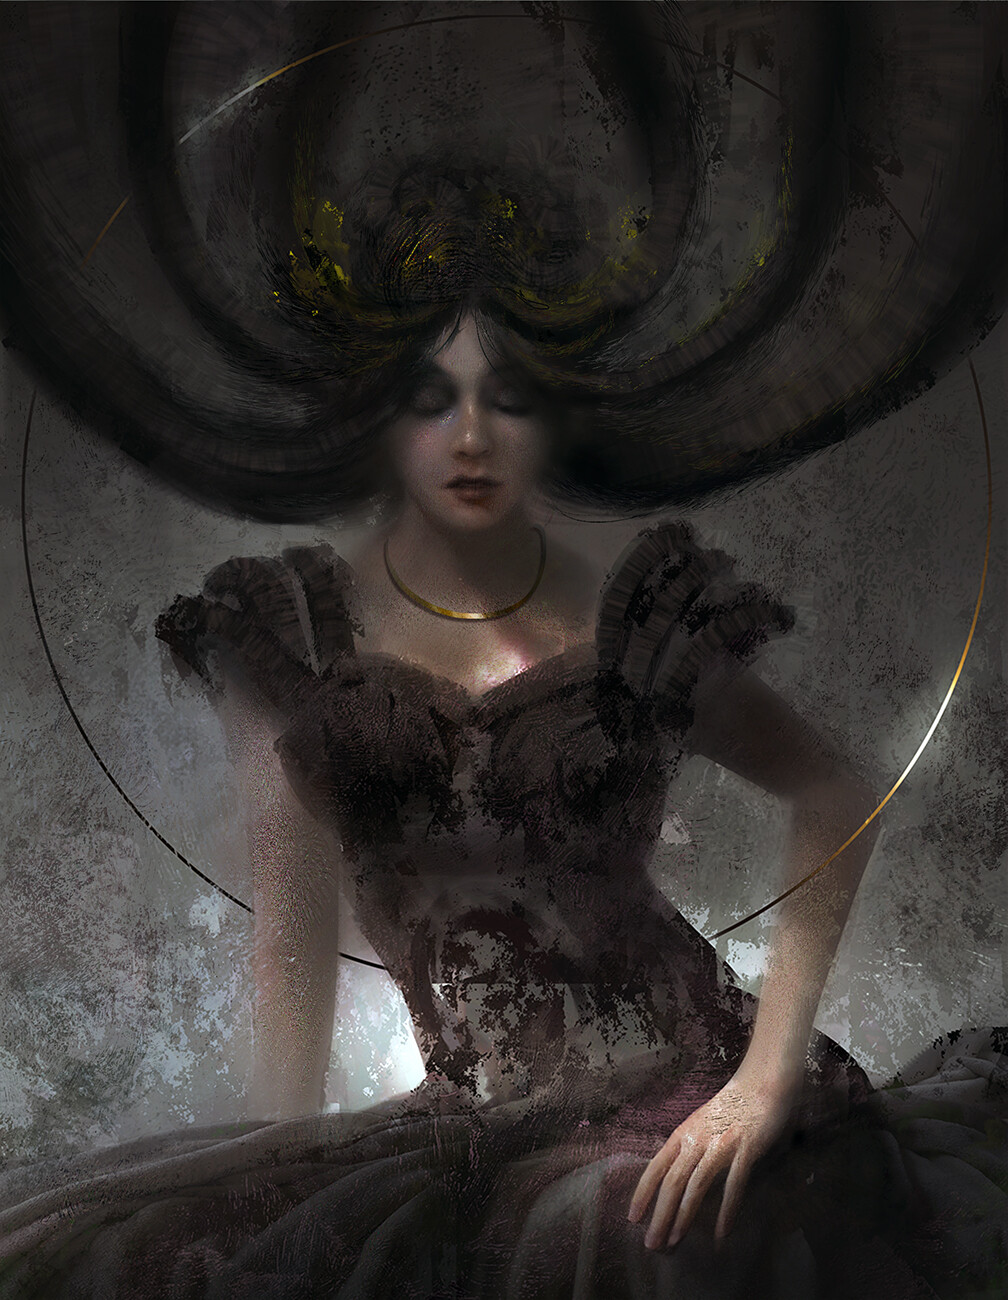 goddess of darkness costume